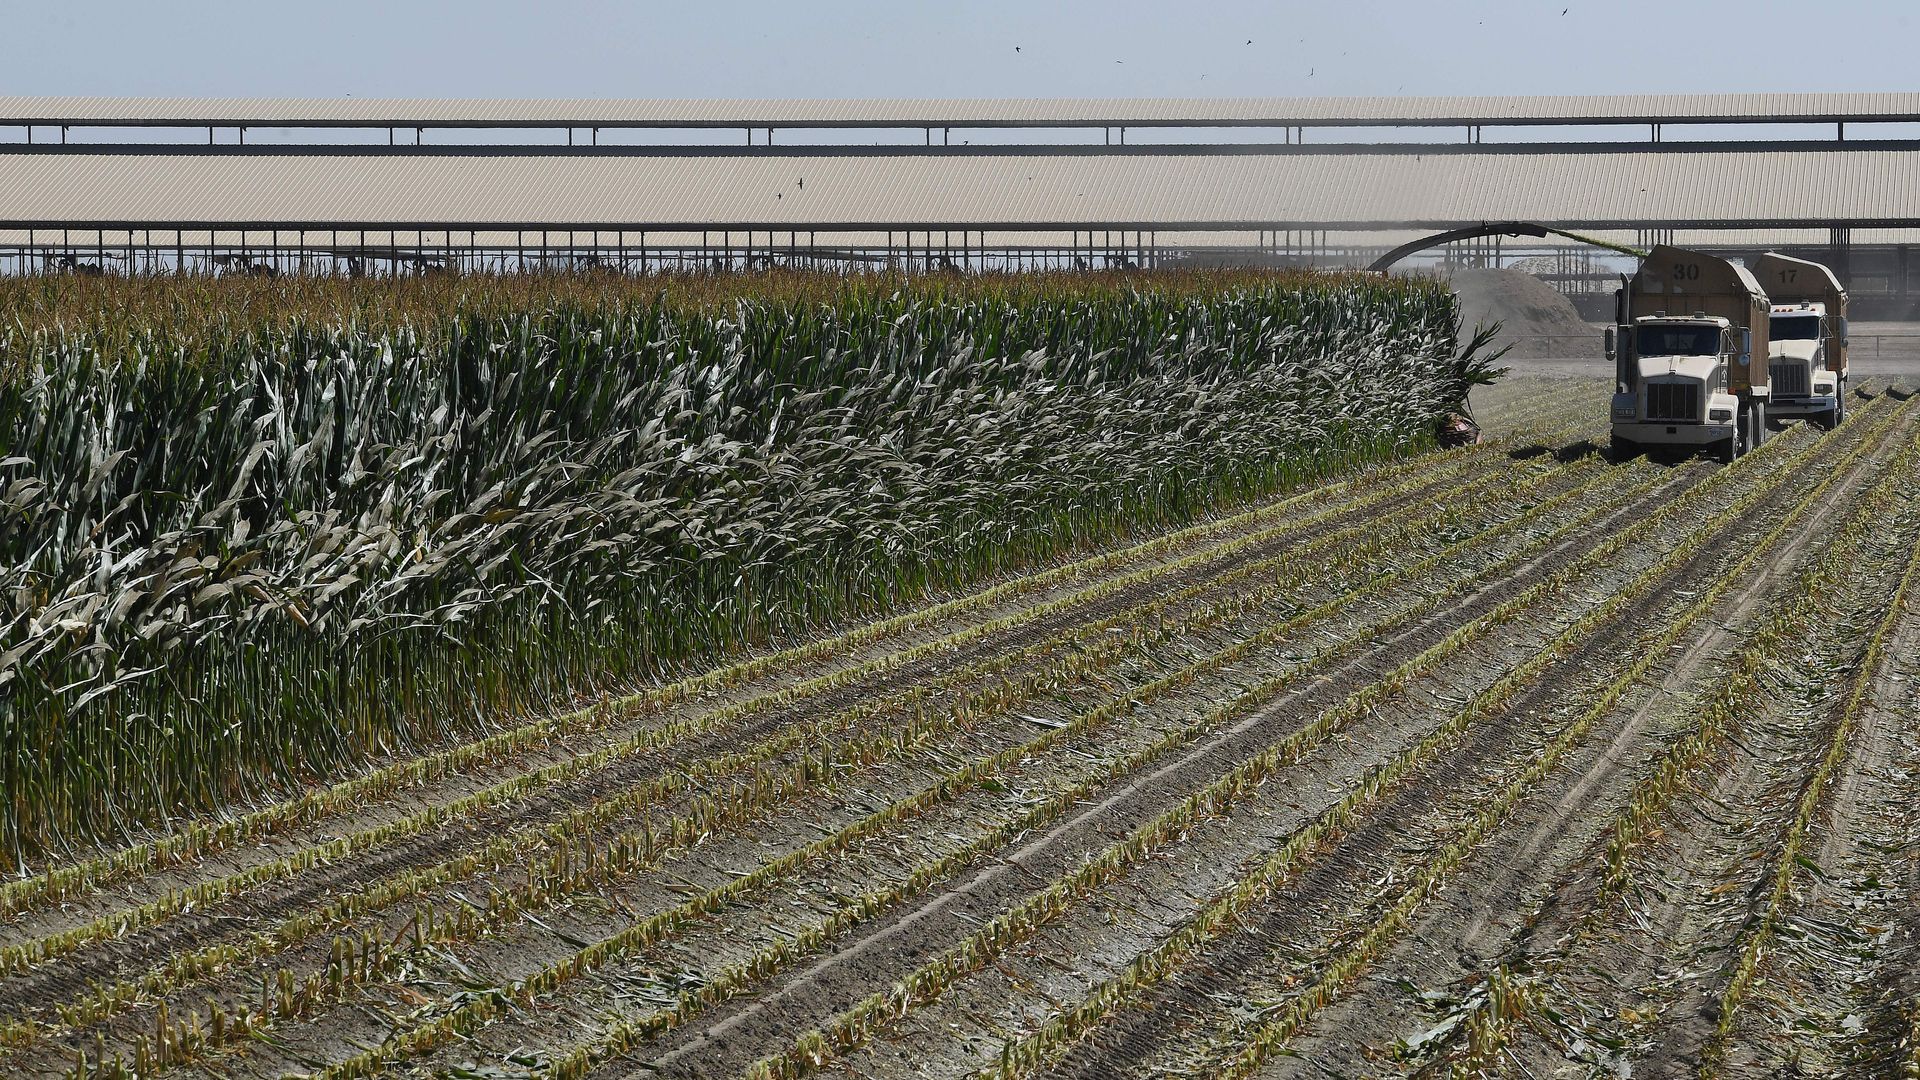 Farmers harvesting corn crop in Tulare, California.